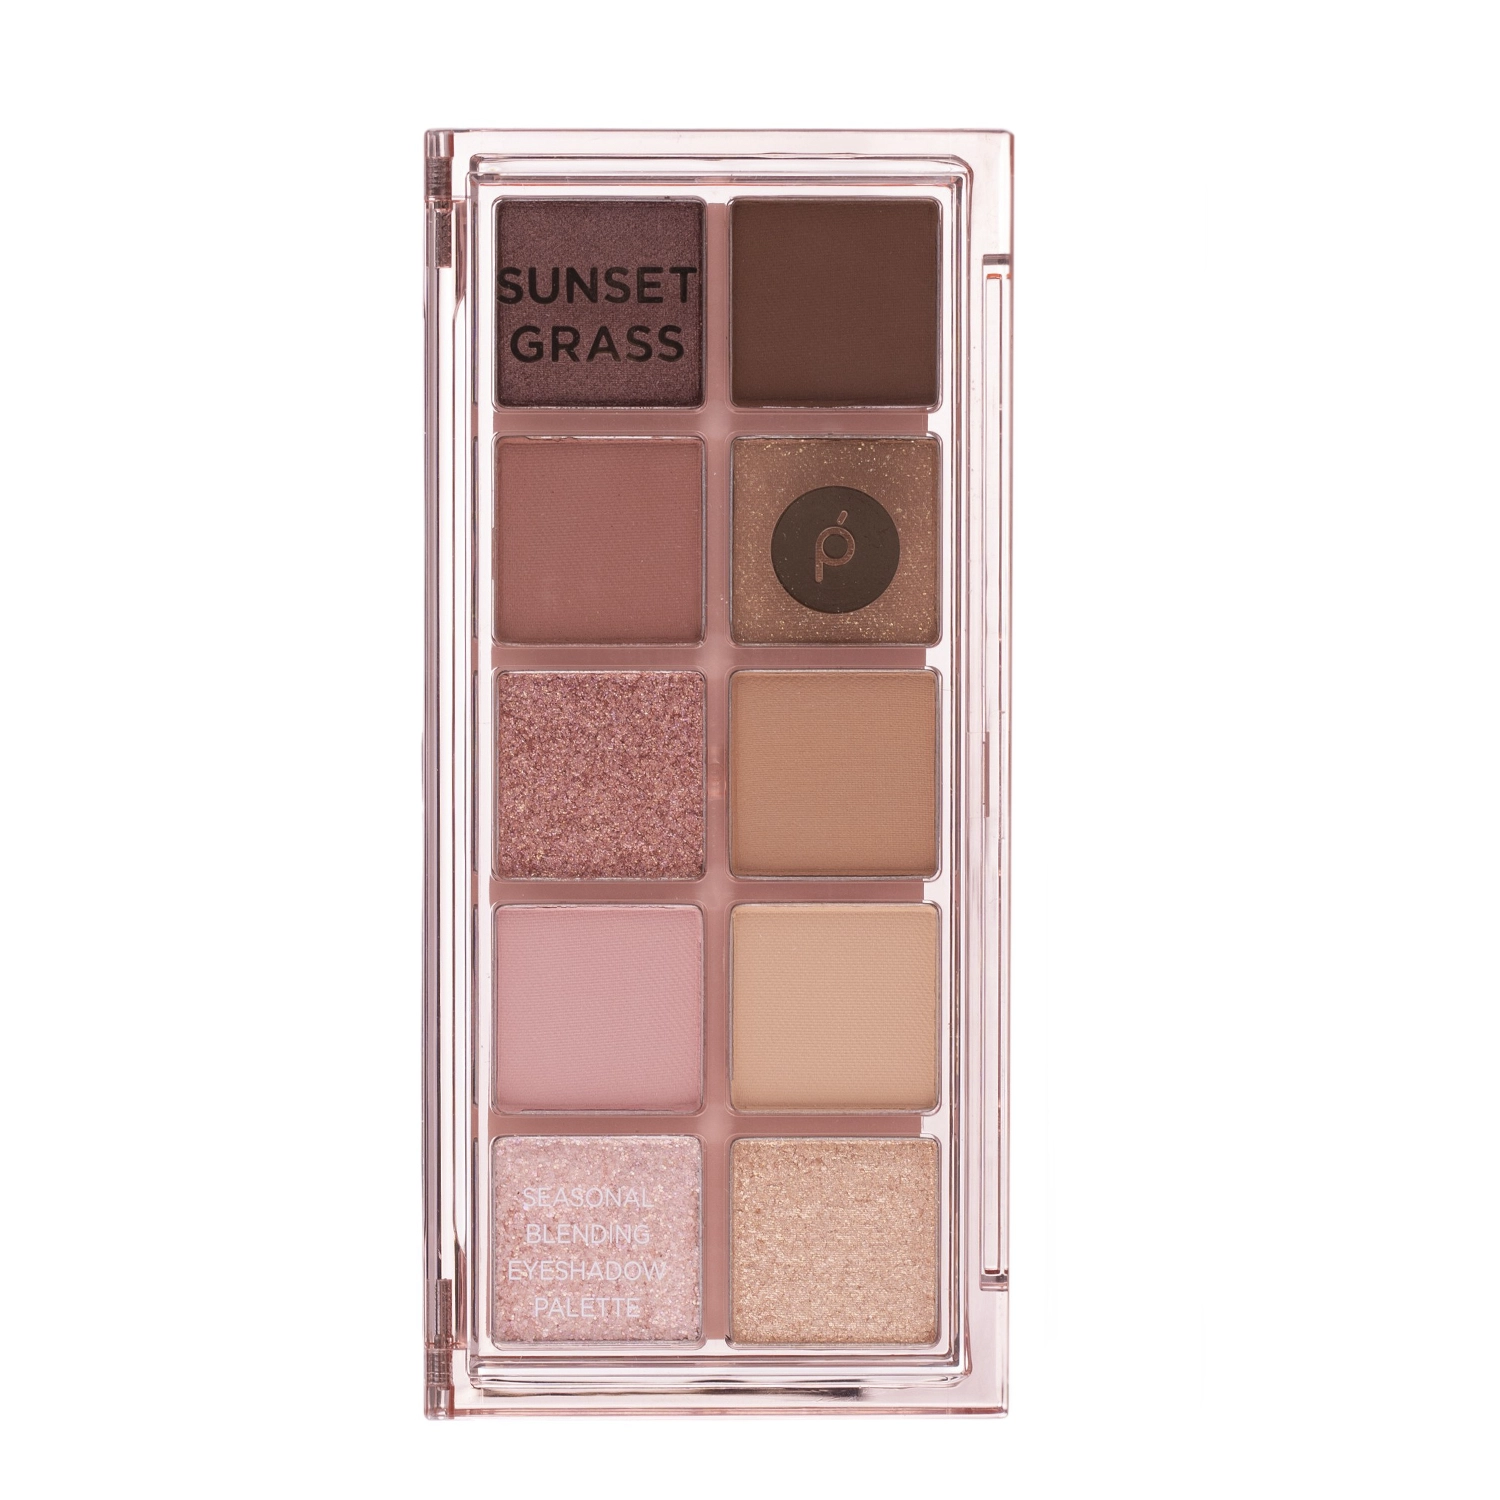 Peach C - Seasonal Blending Eyeshadow Palette - Палетка теней для век - 01 Sunset Grass - 7,5g